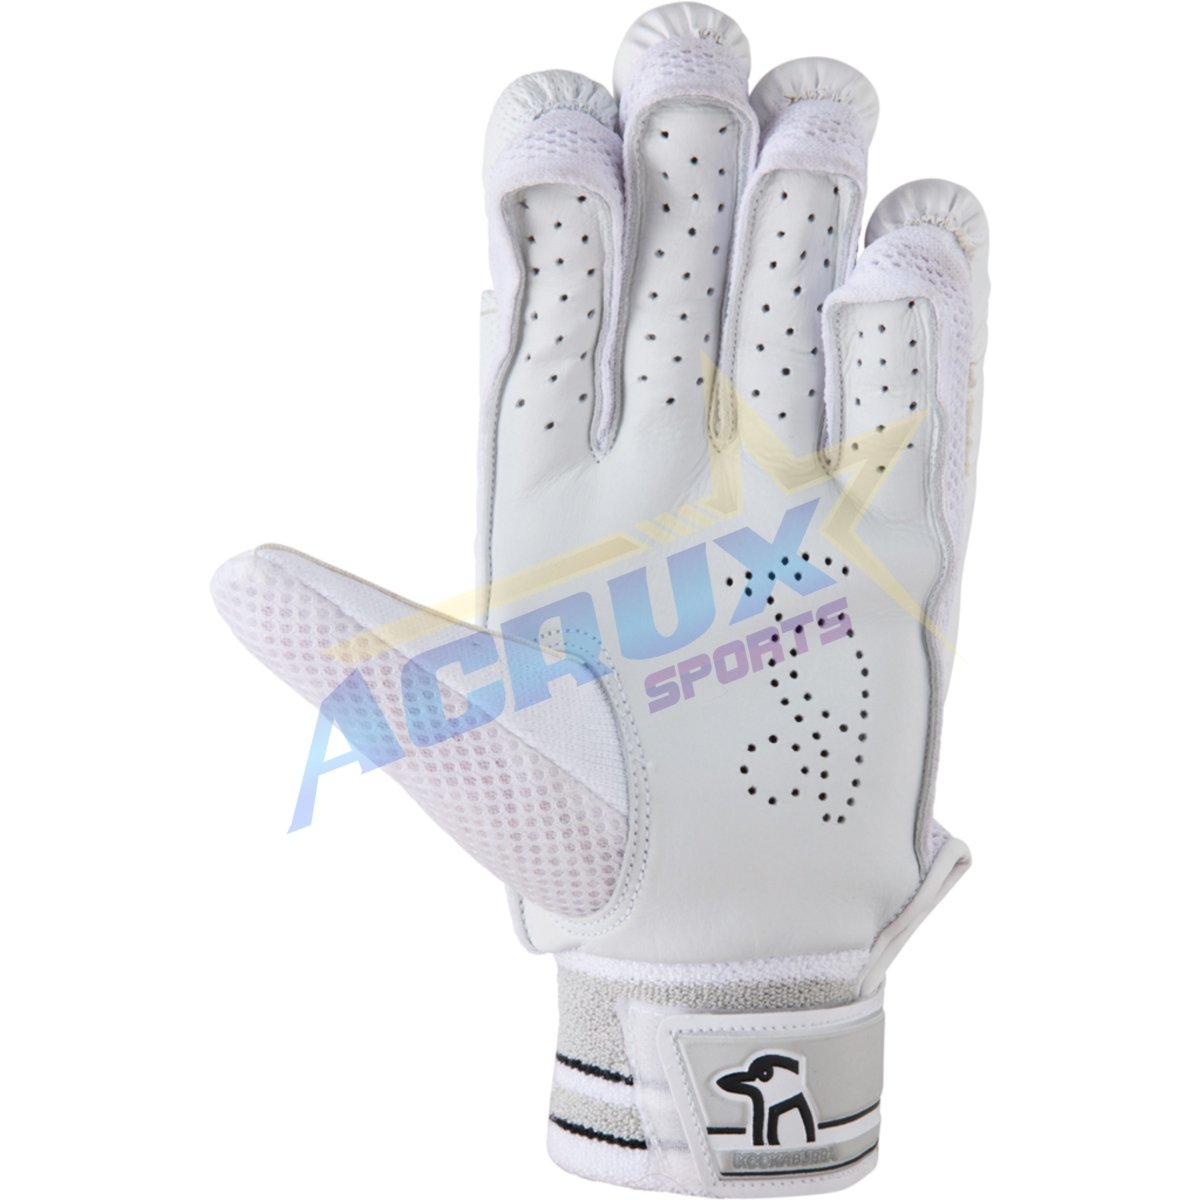 Kookaburra Ghost Pro 6.0 Junior Cricket Batting Gloves